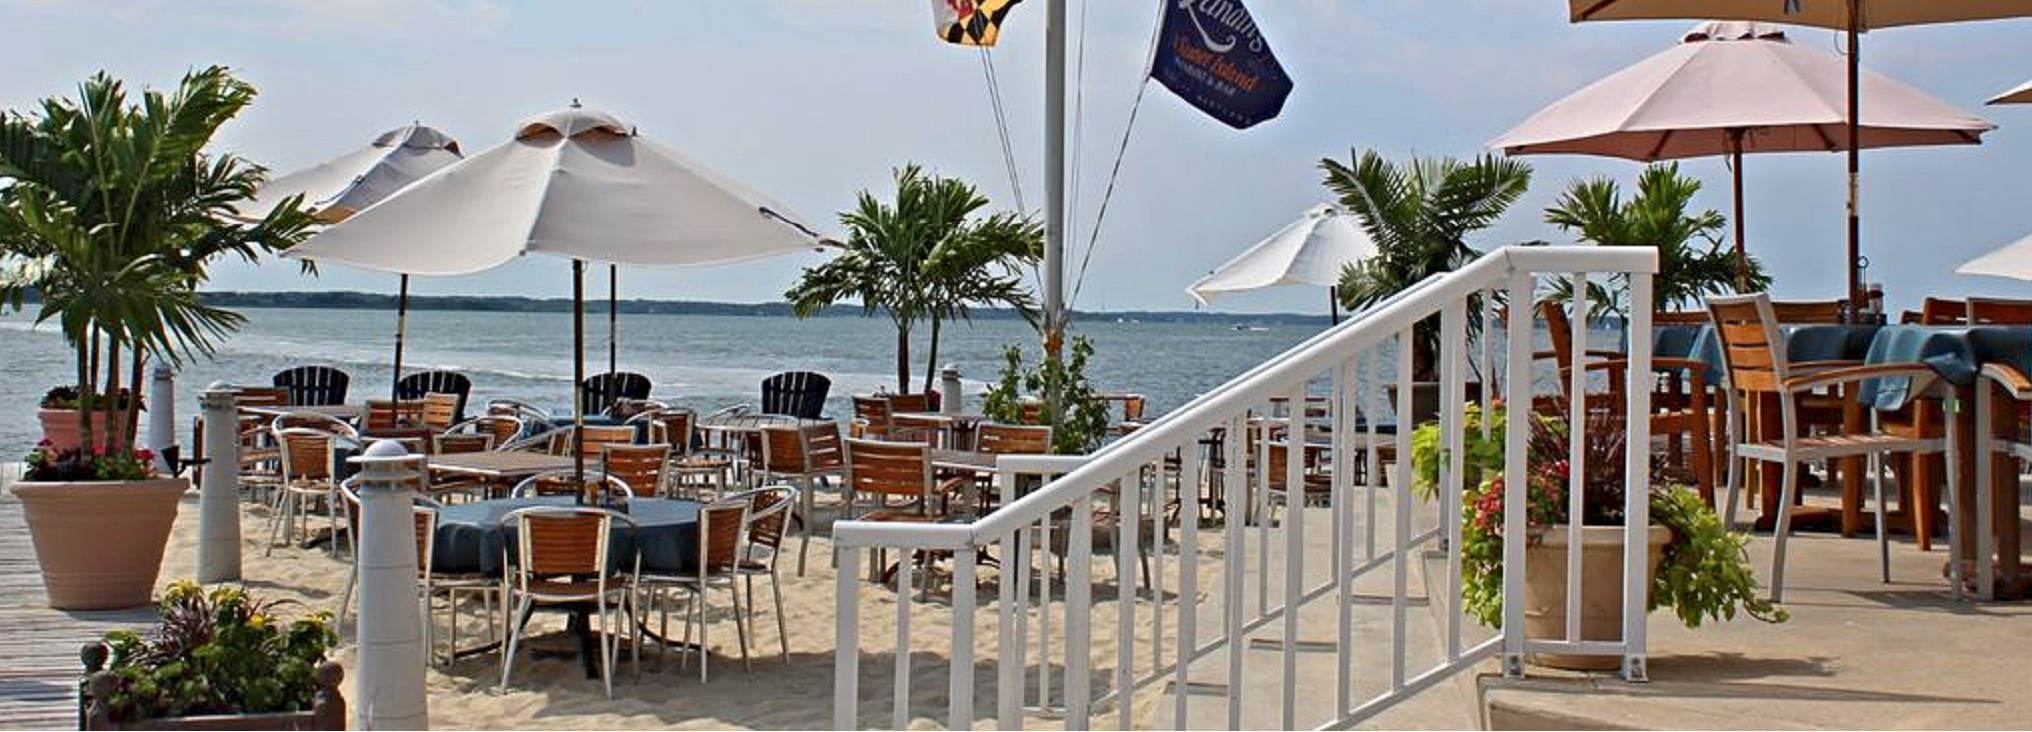 Vacation Rentals In Ocean City MD Beach Rentals Senior